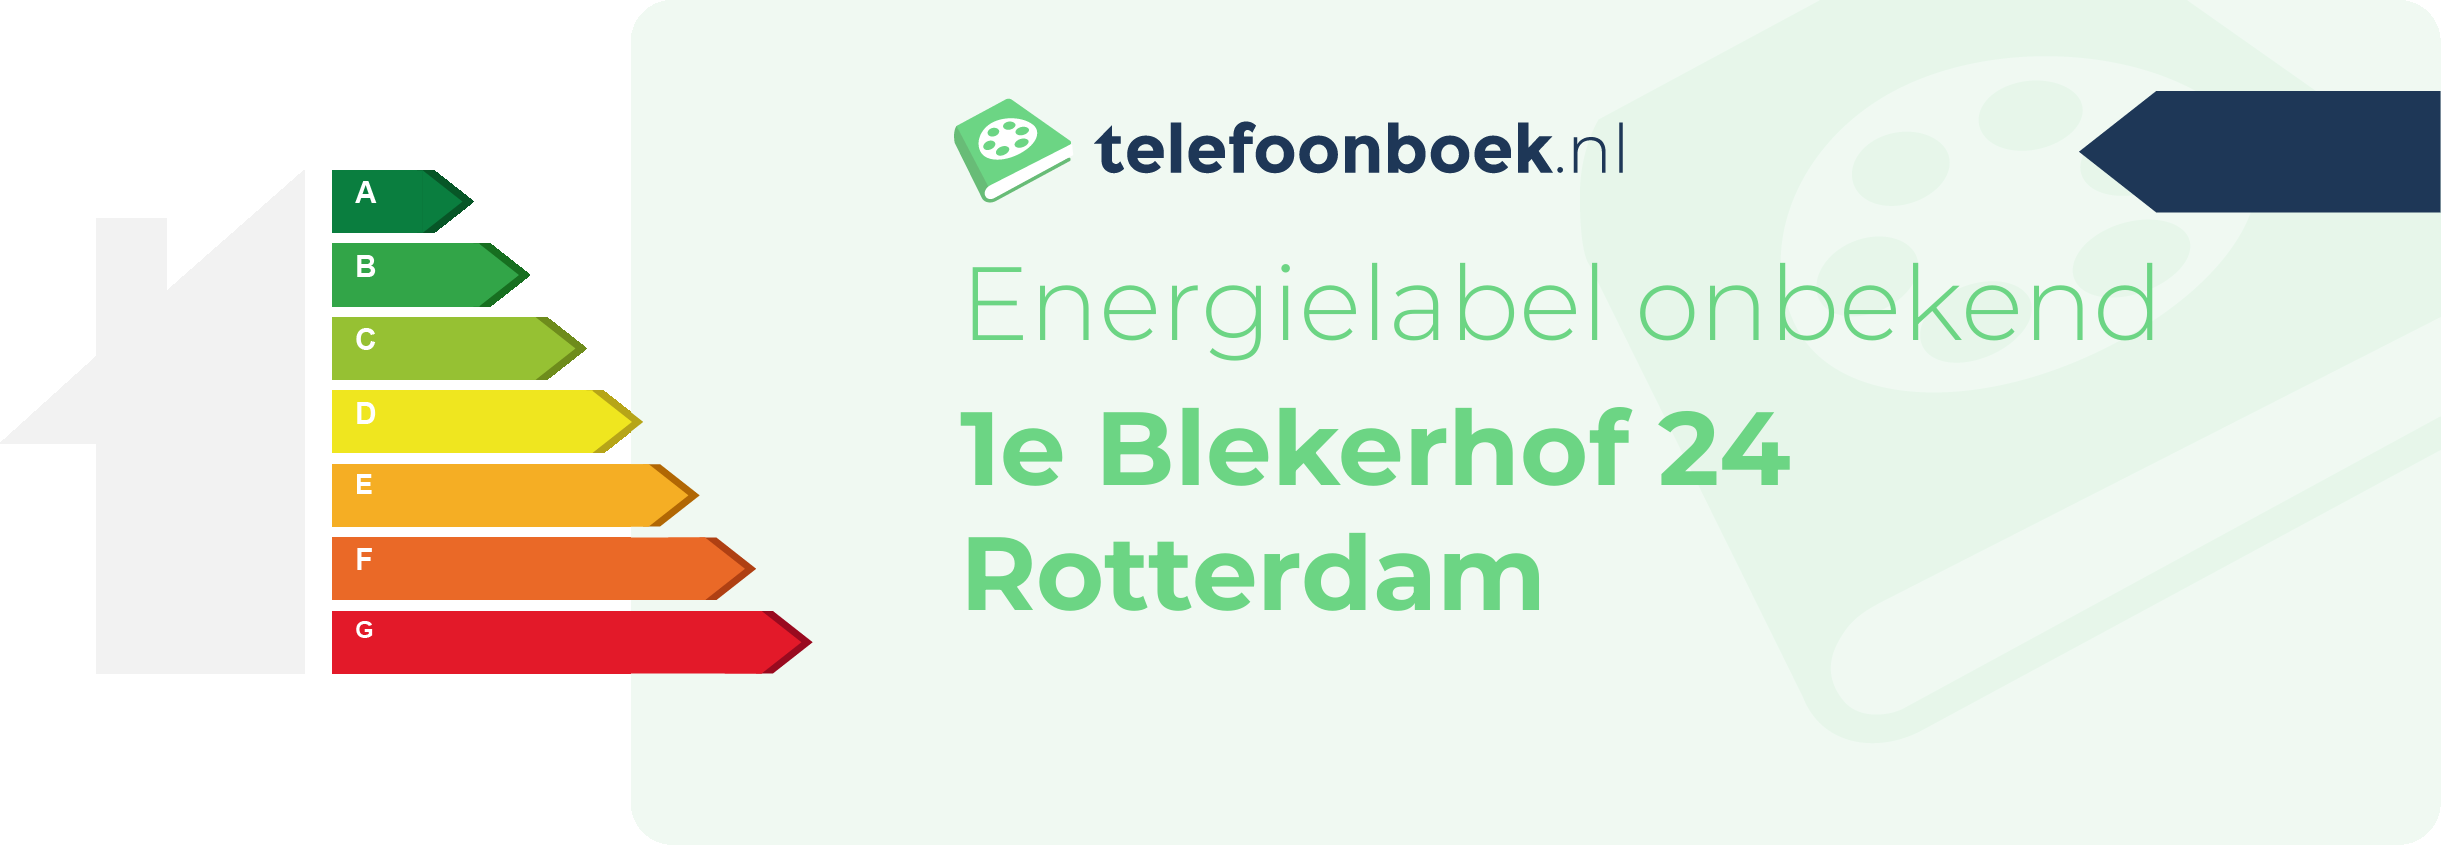 Energielabel 1e Blekerhof 24 Rotterdam